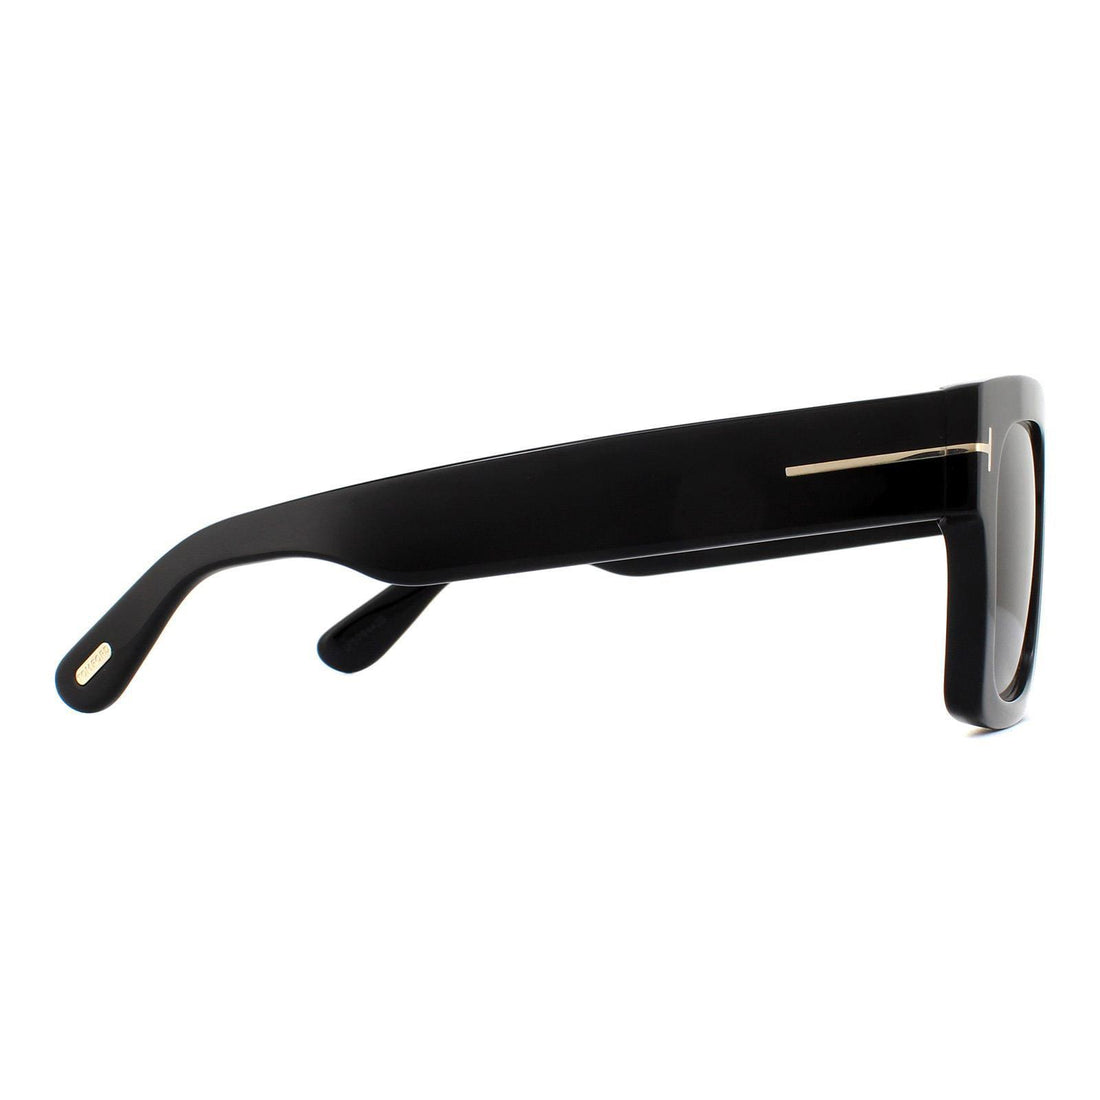 Tom Ford Sunglasses 0711 Fausto 01A Shiny Black Smoke Grey